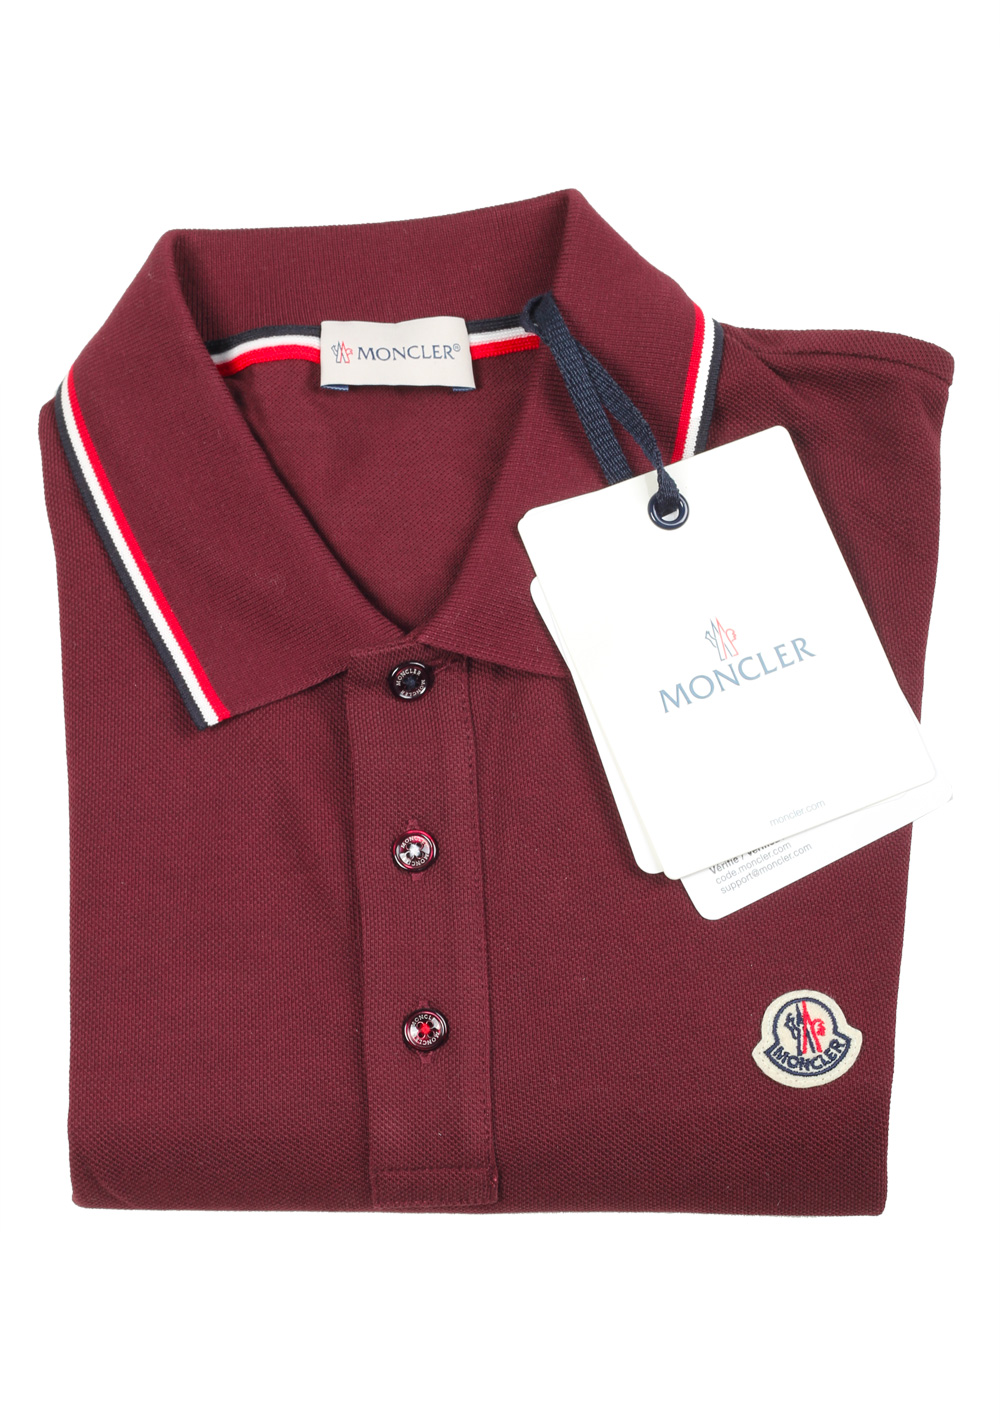 Moncler Red Long Sleeve Polo Shirt Size XL / 42R U.S. | Costume Limité